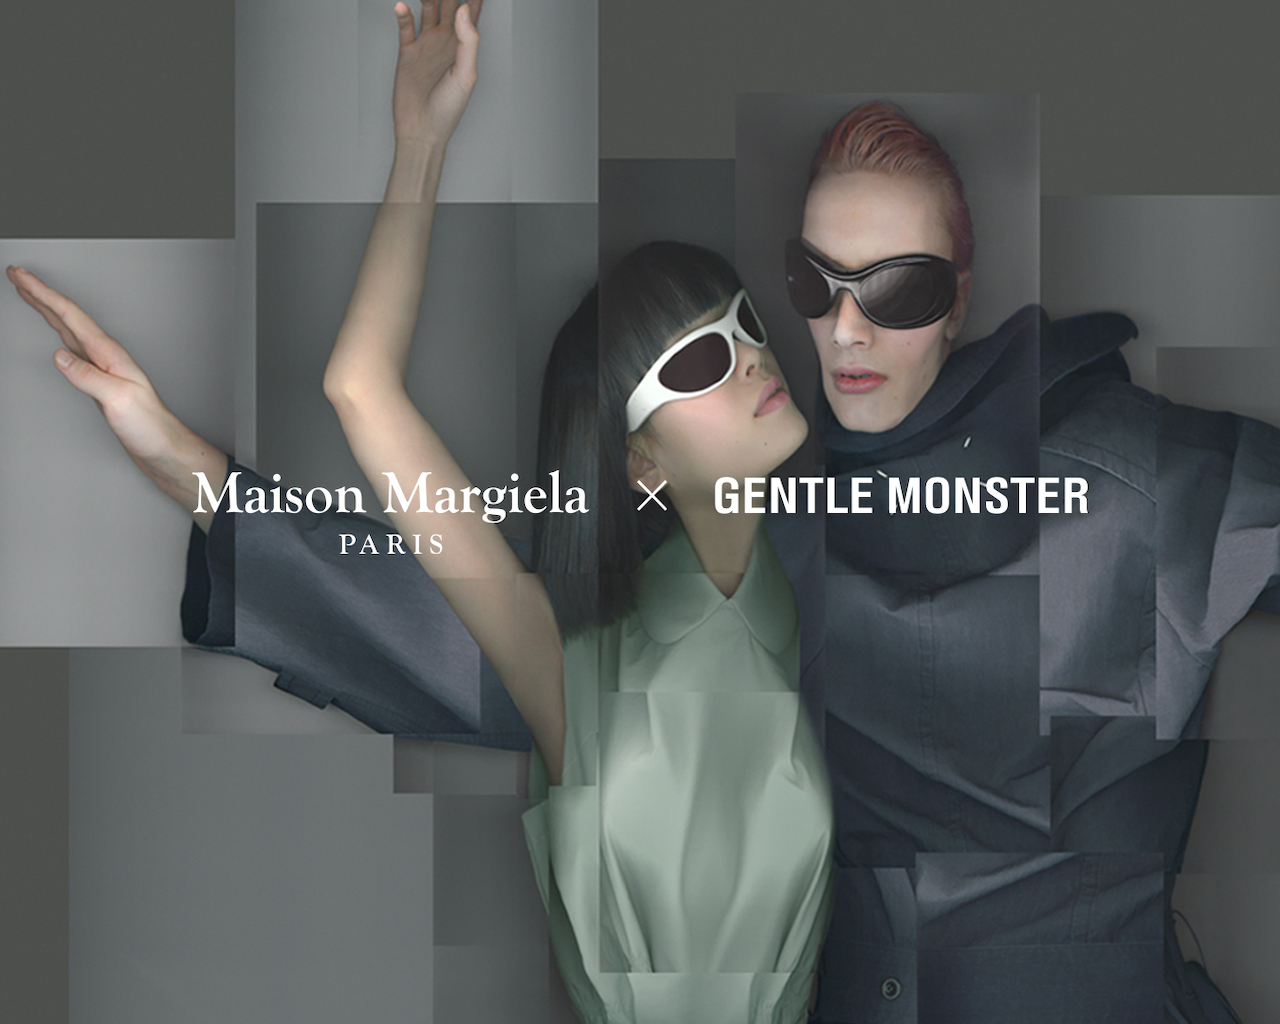 Maison Margiela x Gentle Monster Release Glasses Collab